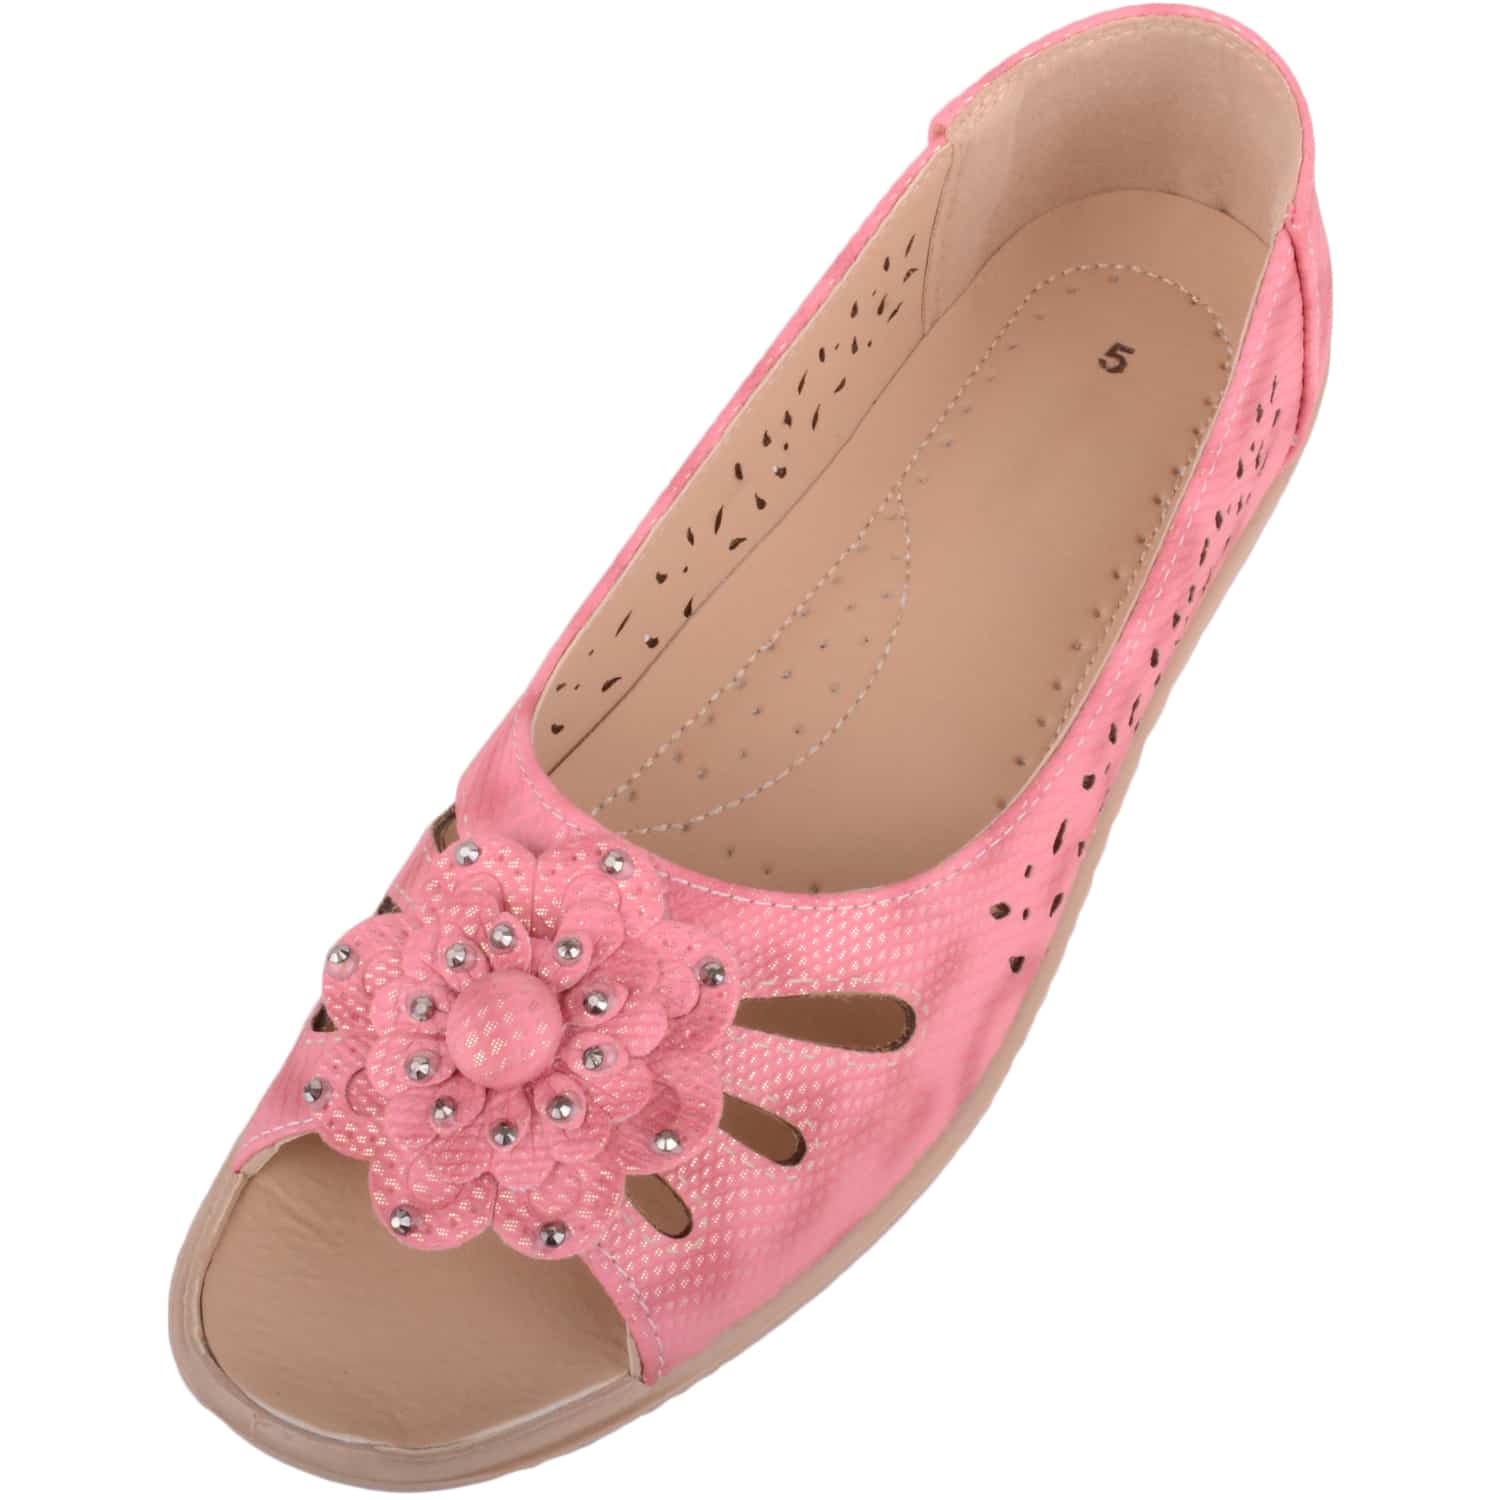 Ladies Summer Peep Toe Sandals Shoes With Floral Design Absolute Footwear